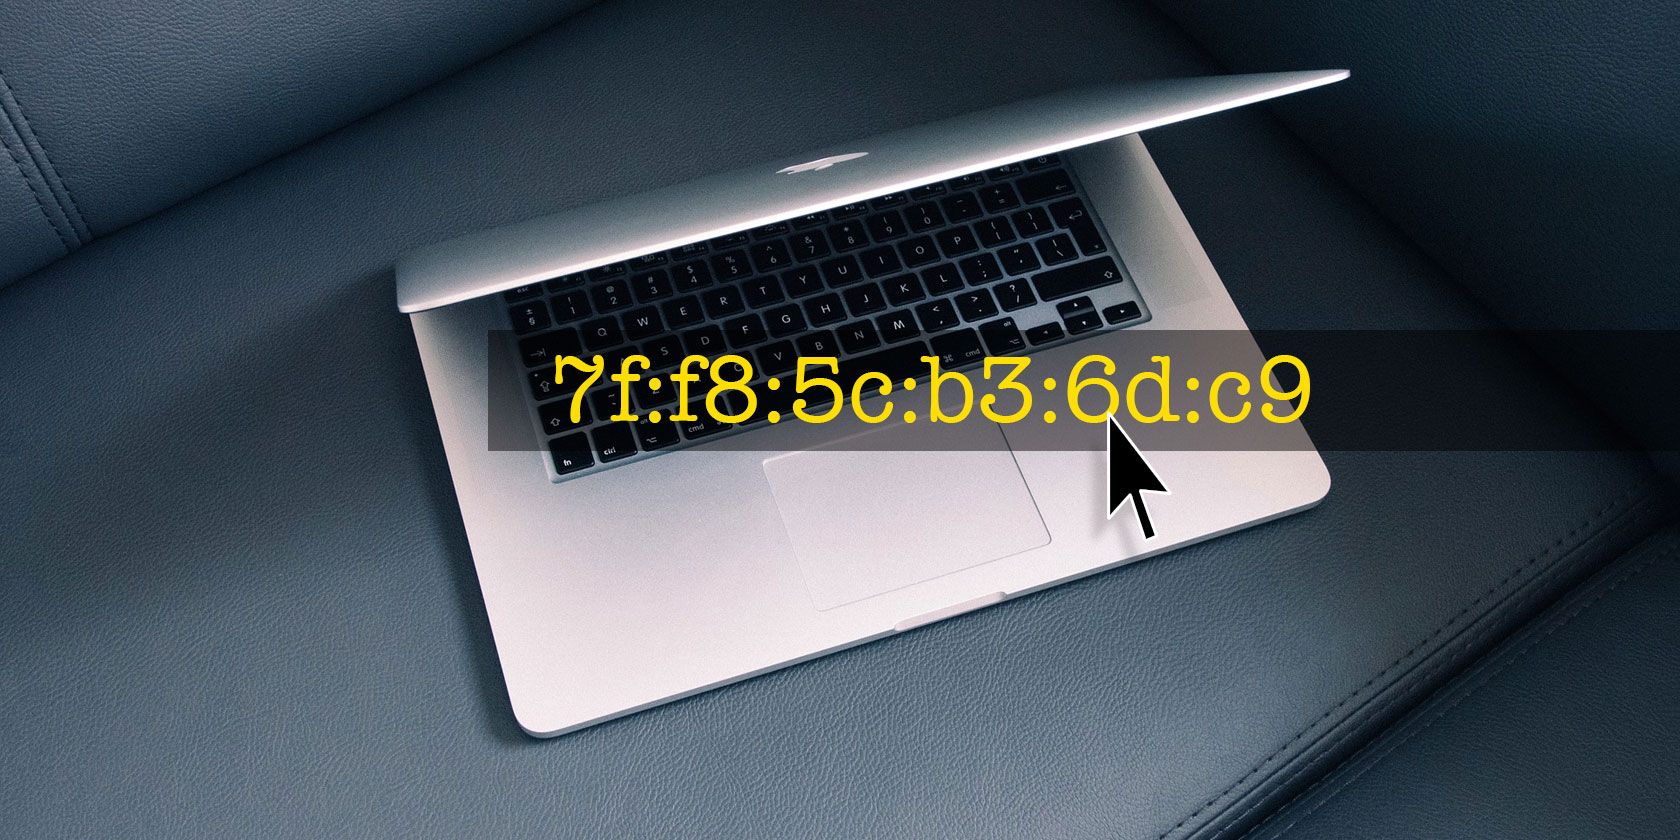 asus mac address authentication